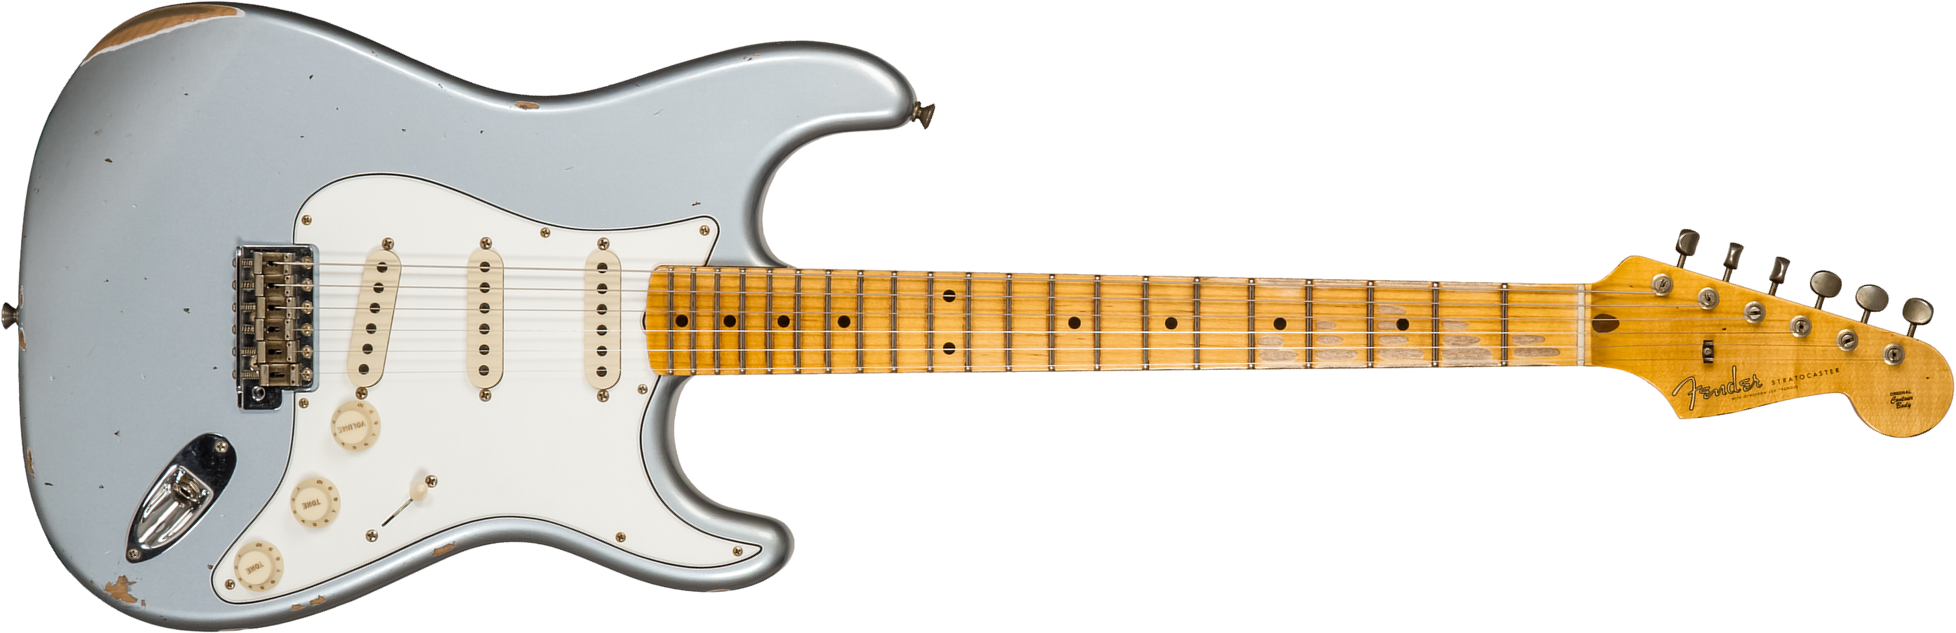 Fender Custom Shop Strat Tomatillo Special 3s Trem Mn #cz571096 - Relic Aged Ice Blue Metallic - E-Gitarre in Str-Form - Main picture